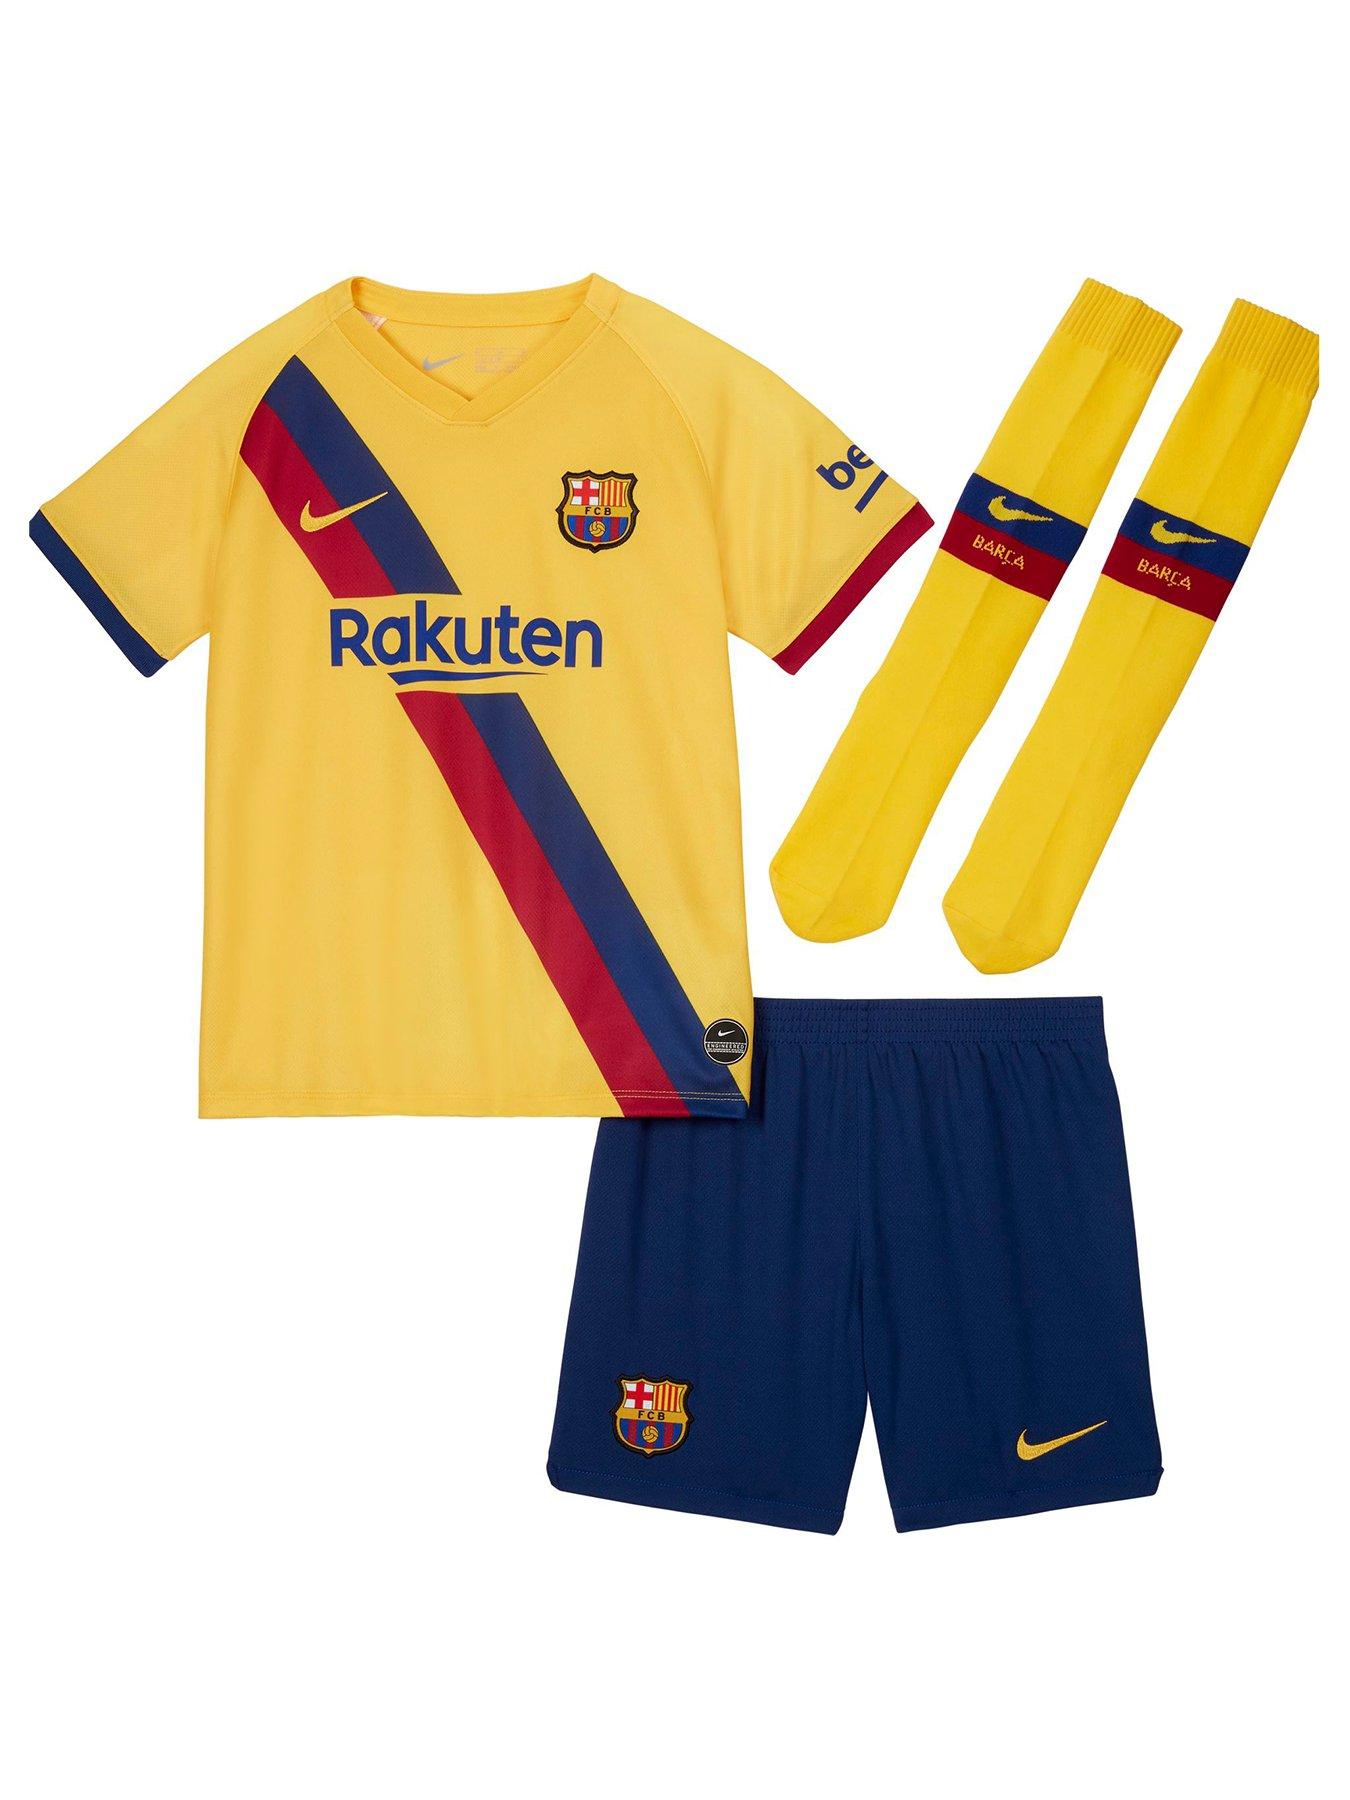 1979 barcelona kit